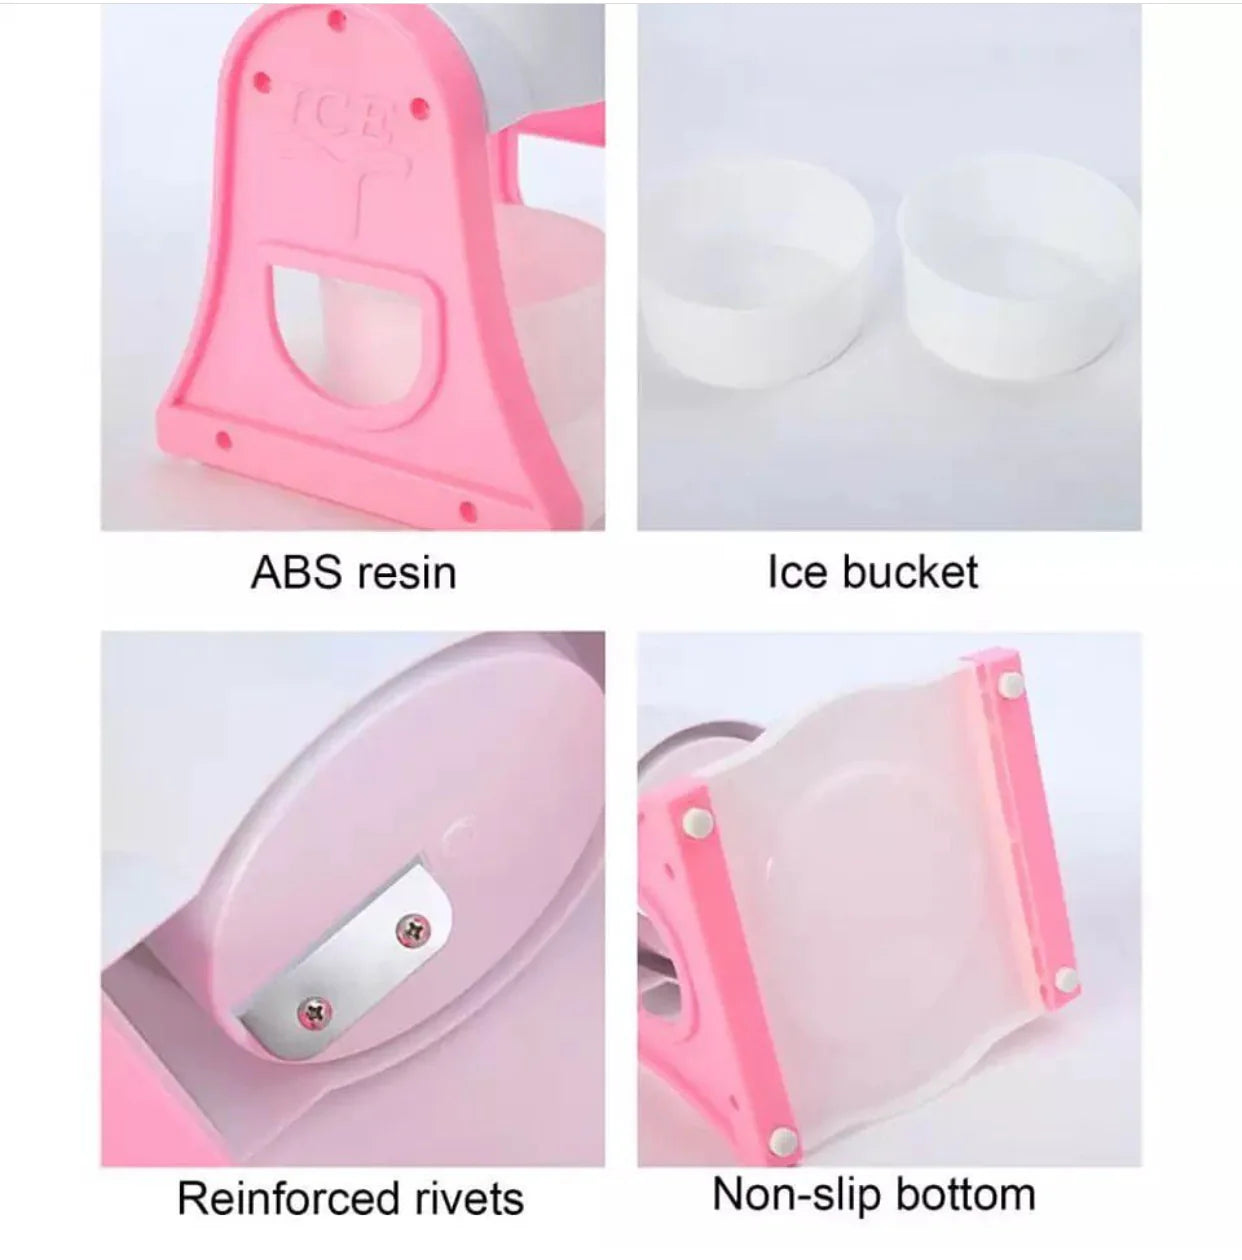 Portable Manual Ice Shaver Snow Ball Machine, Mini Ice Shaving Machine, Ice Cream Grinding Machine